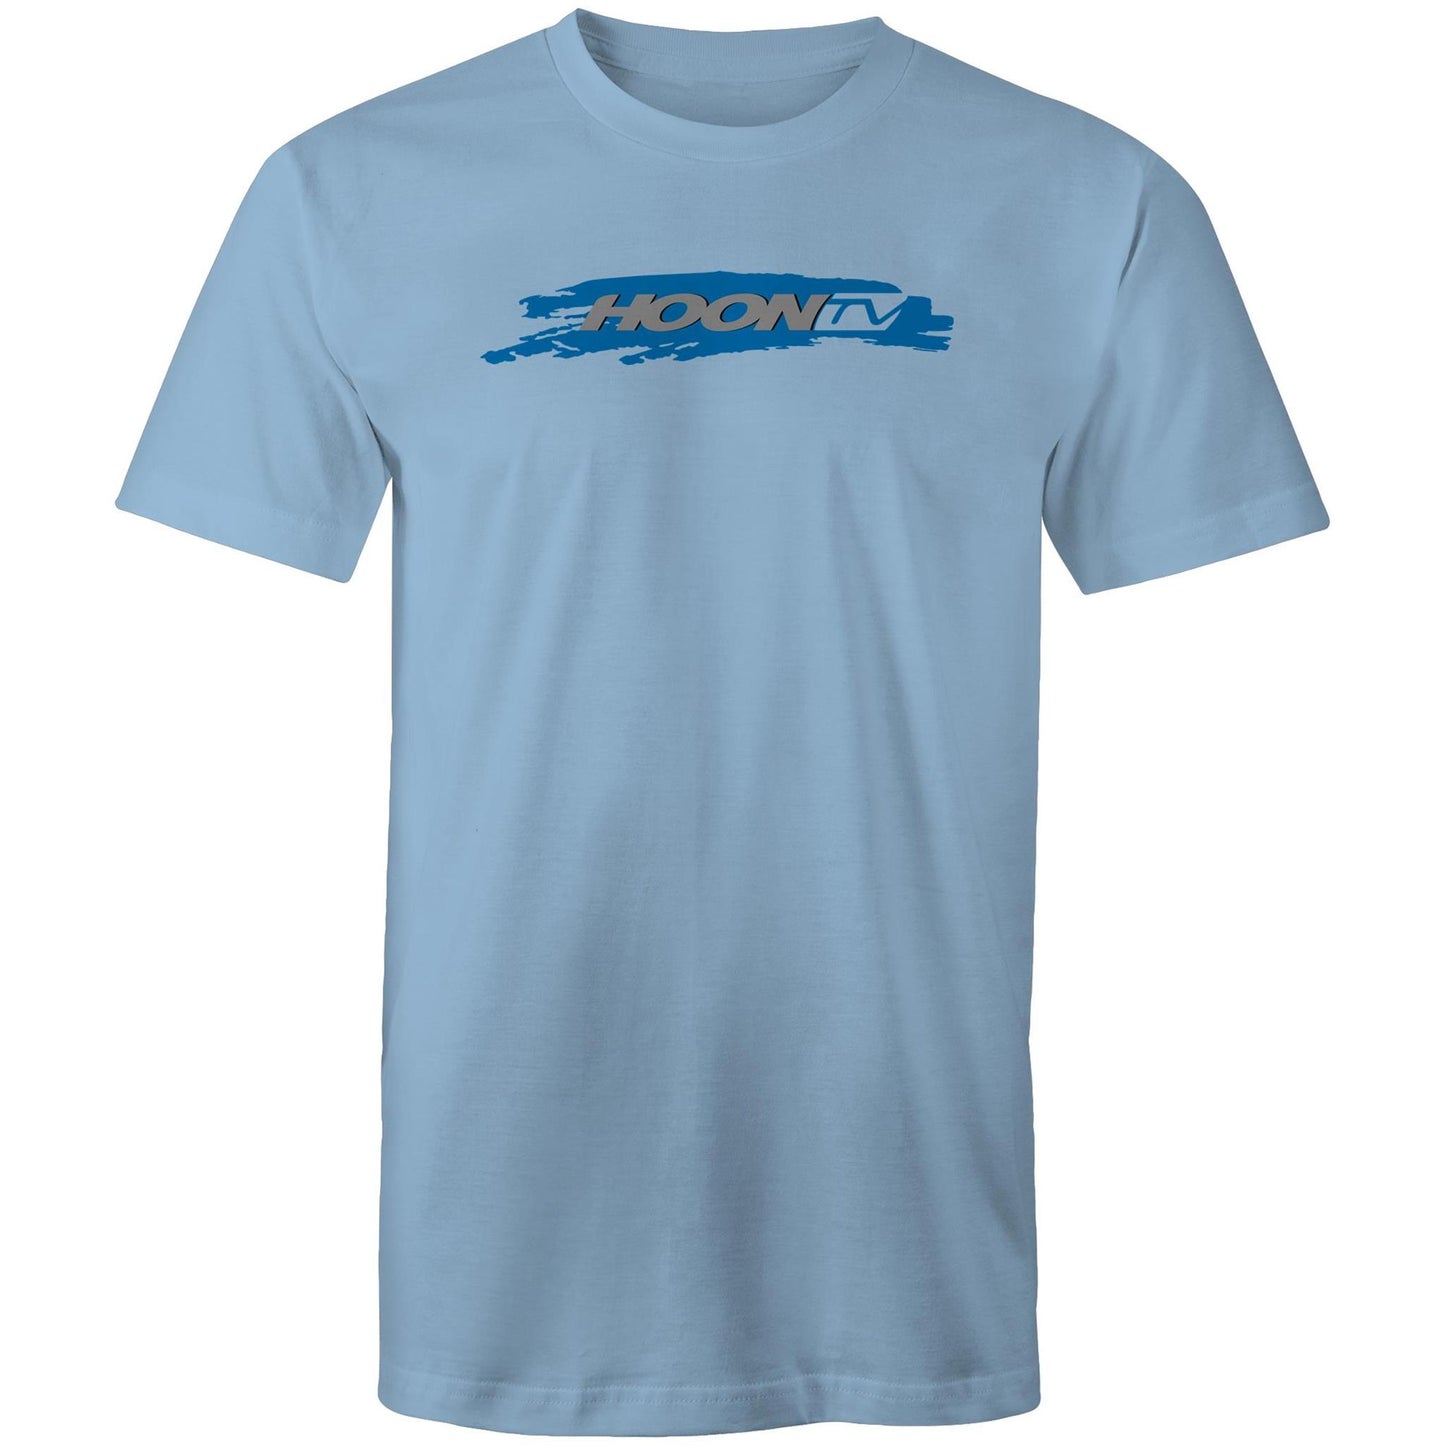 Project XH - Barra Turbo Drag Car - Mens T-Shirt